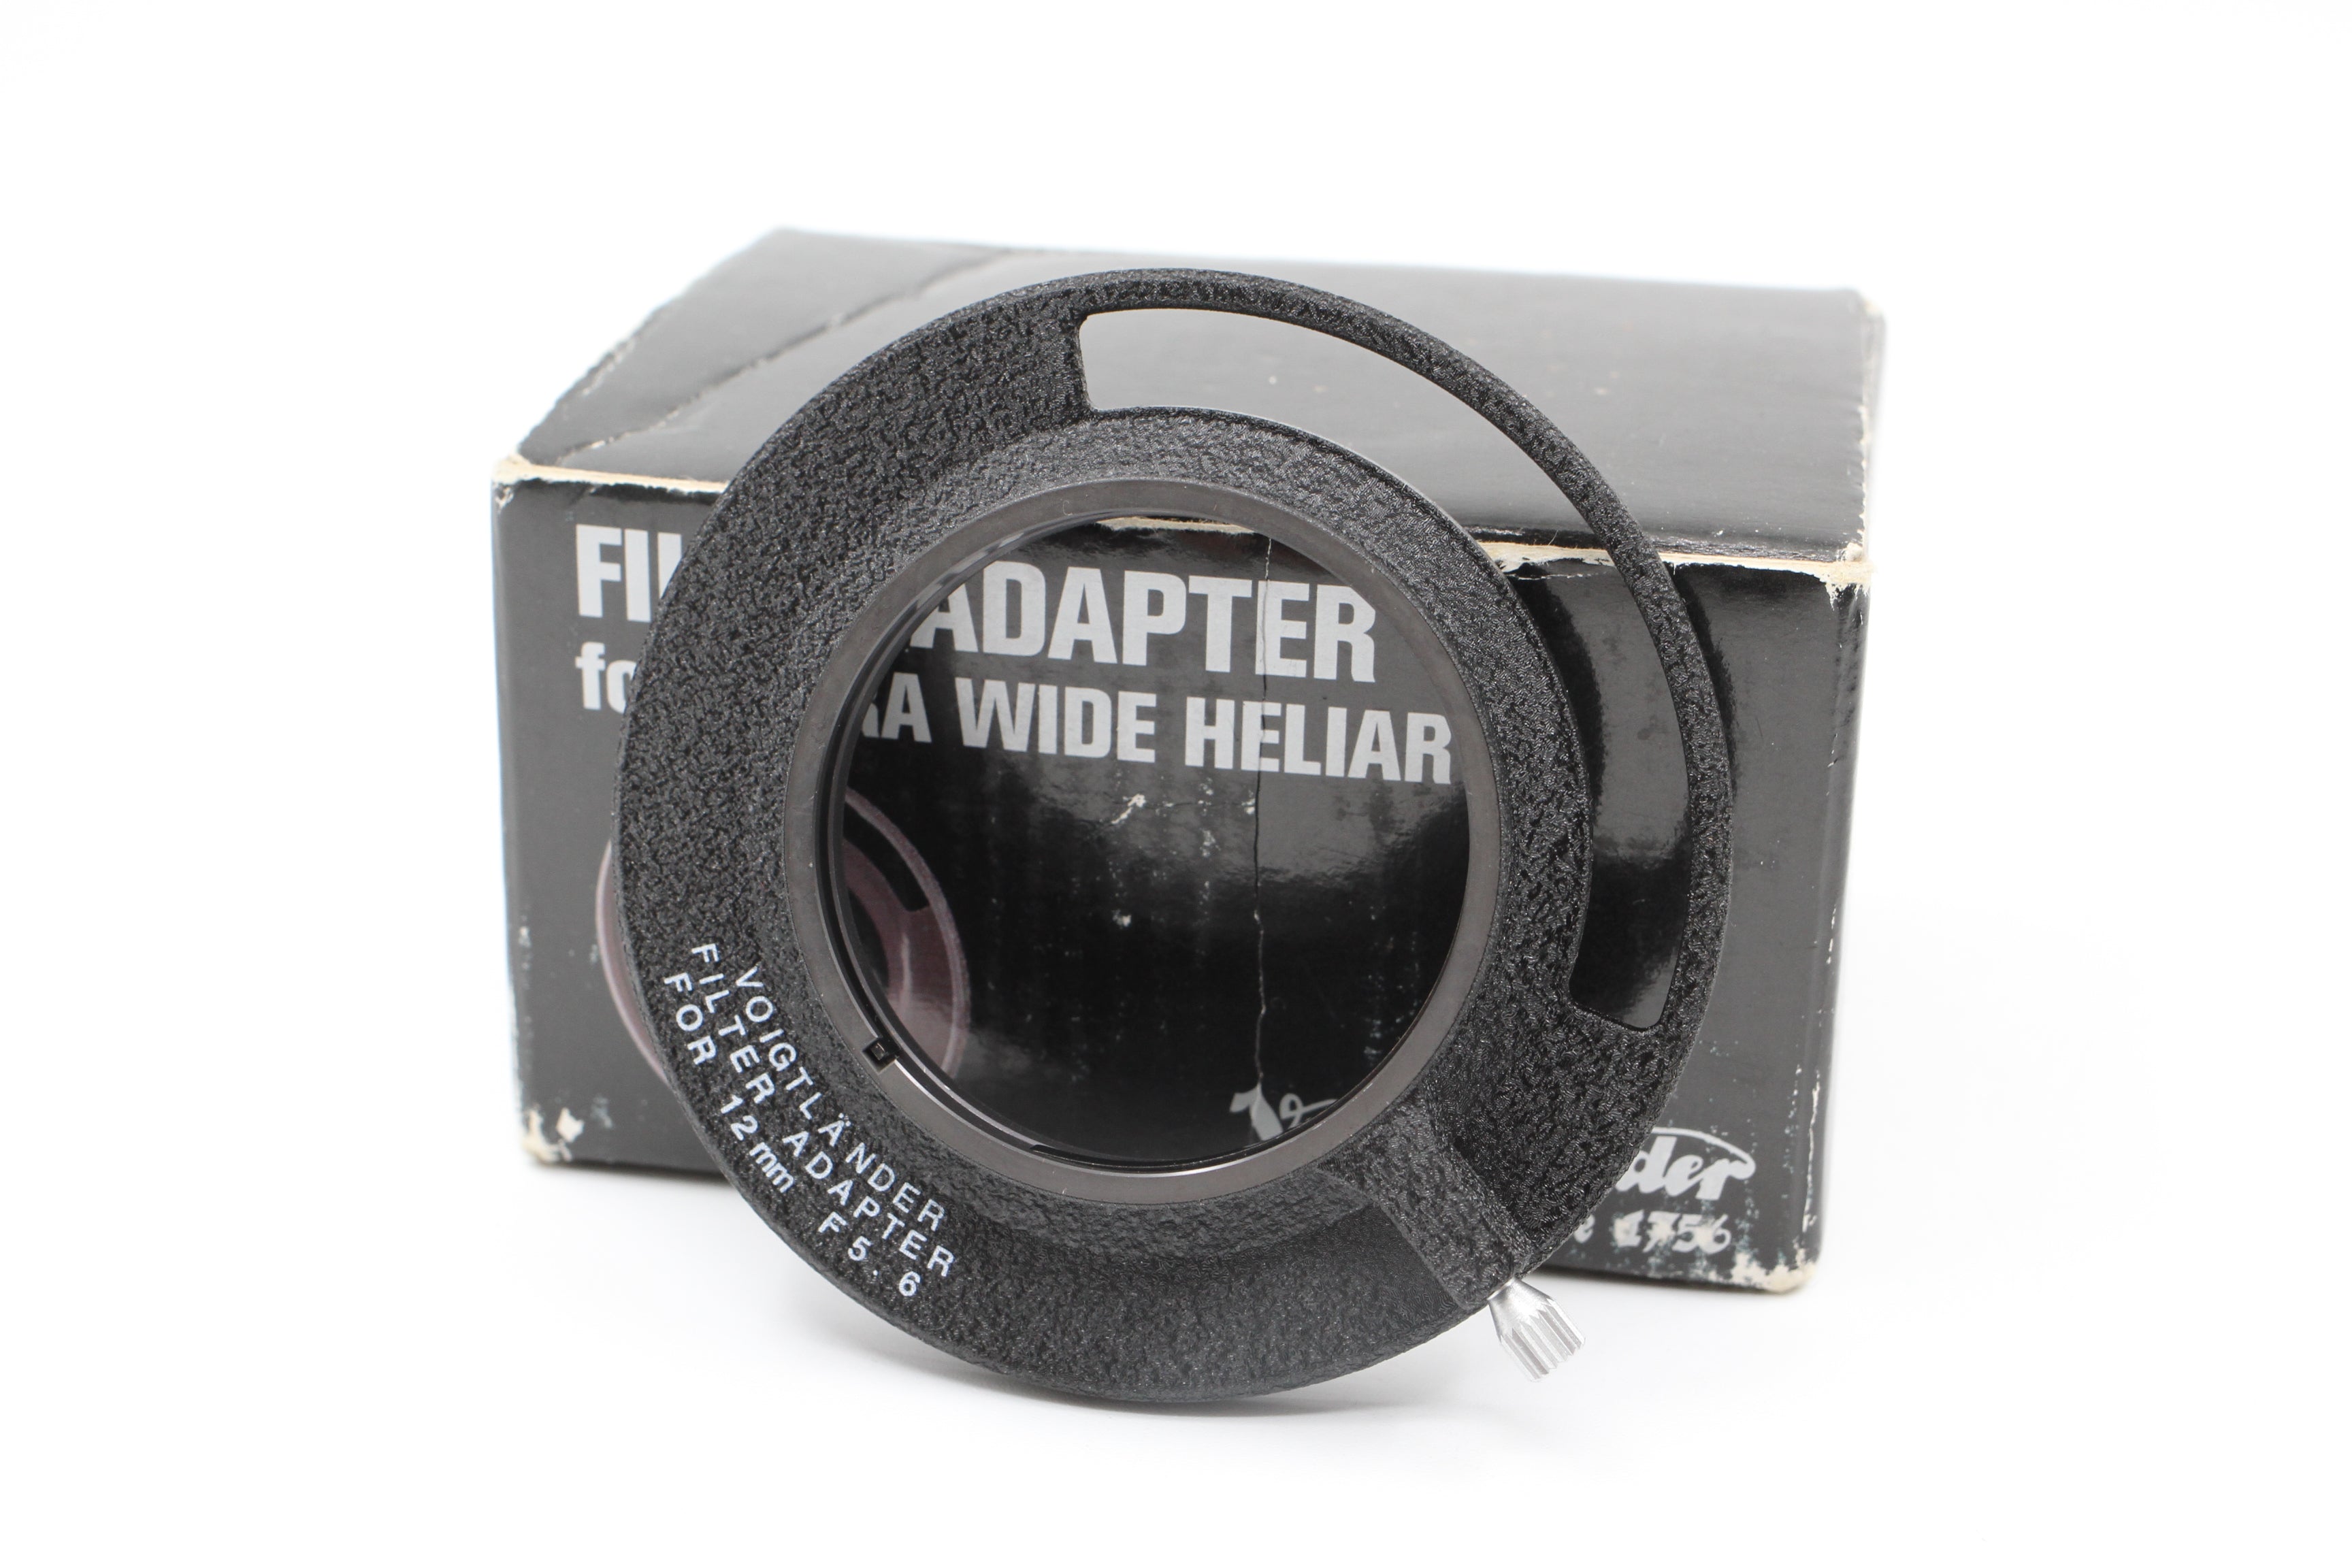 Voigtlander Ultra Wide Heliar Filter Adapter f/ 12mm f5.6, Boxed